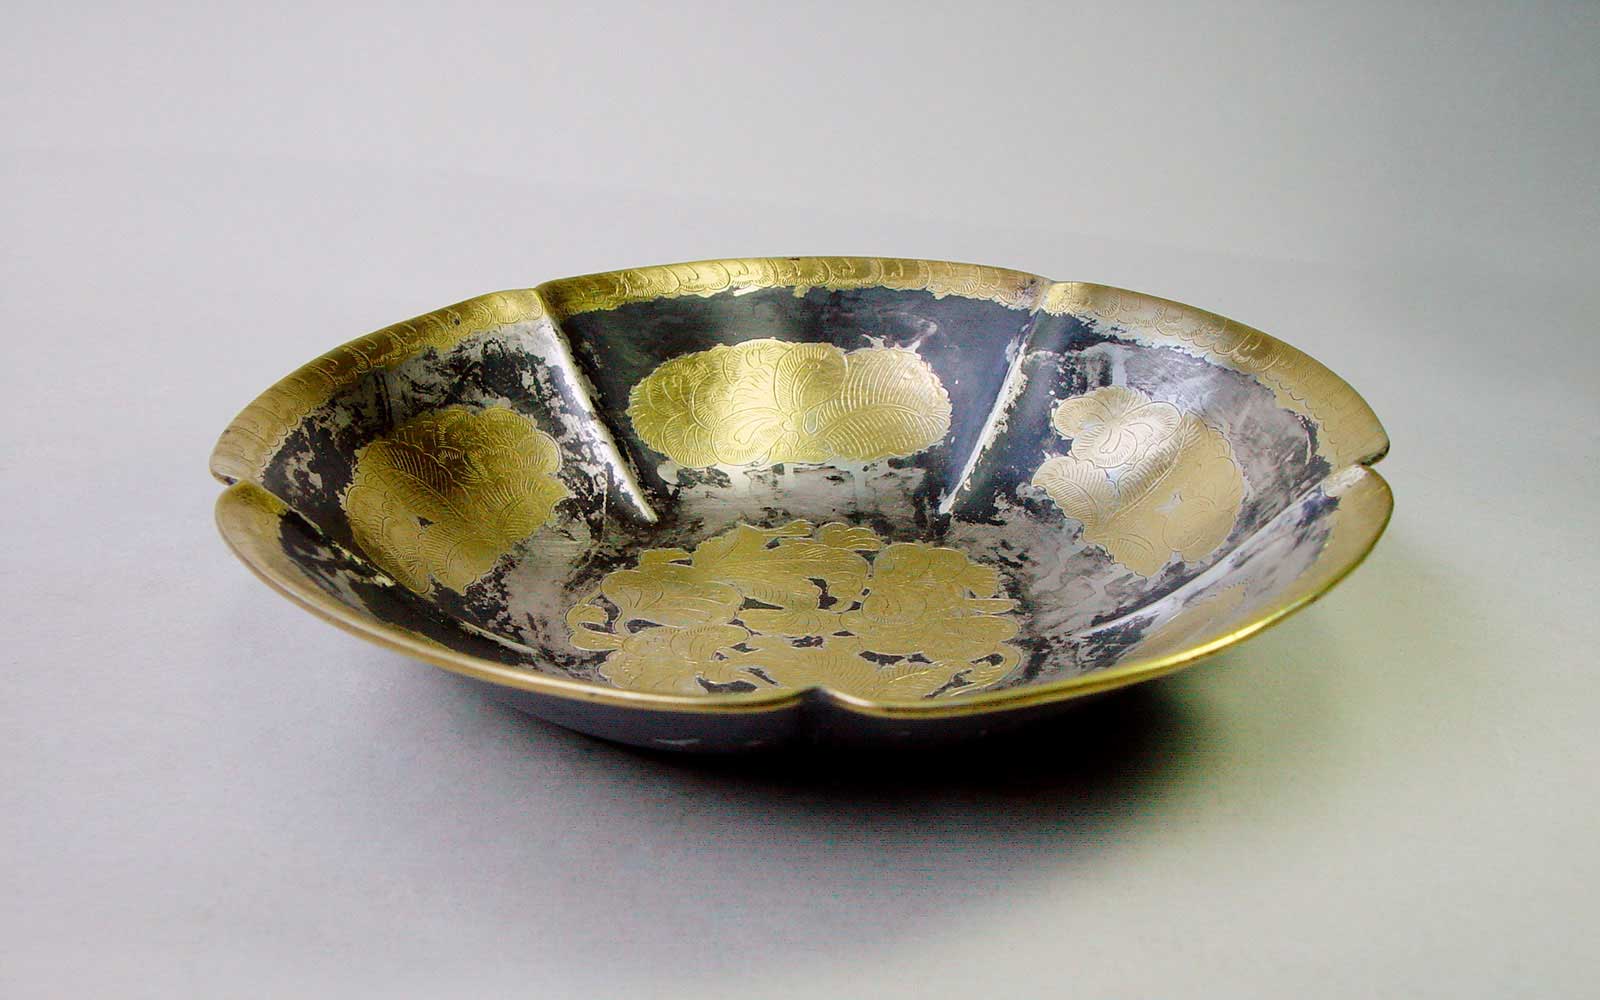 唐 銀鎏金寶相花碗 Gilt-Silver Bowl, Tang Dynasty (618-907 CE), h4xd20.7cm